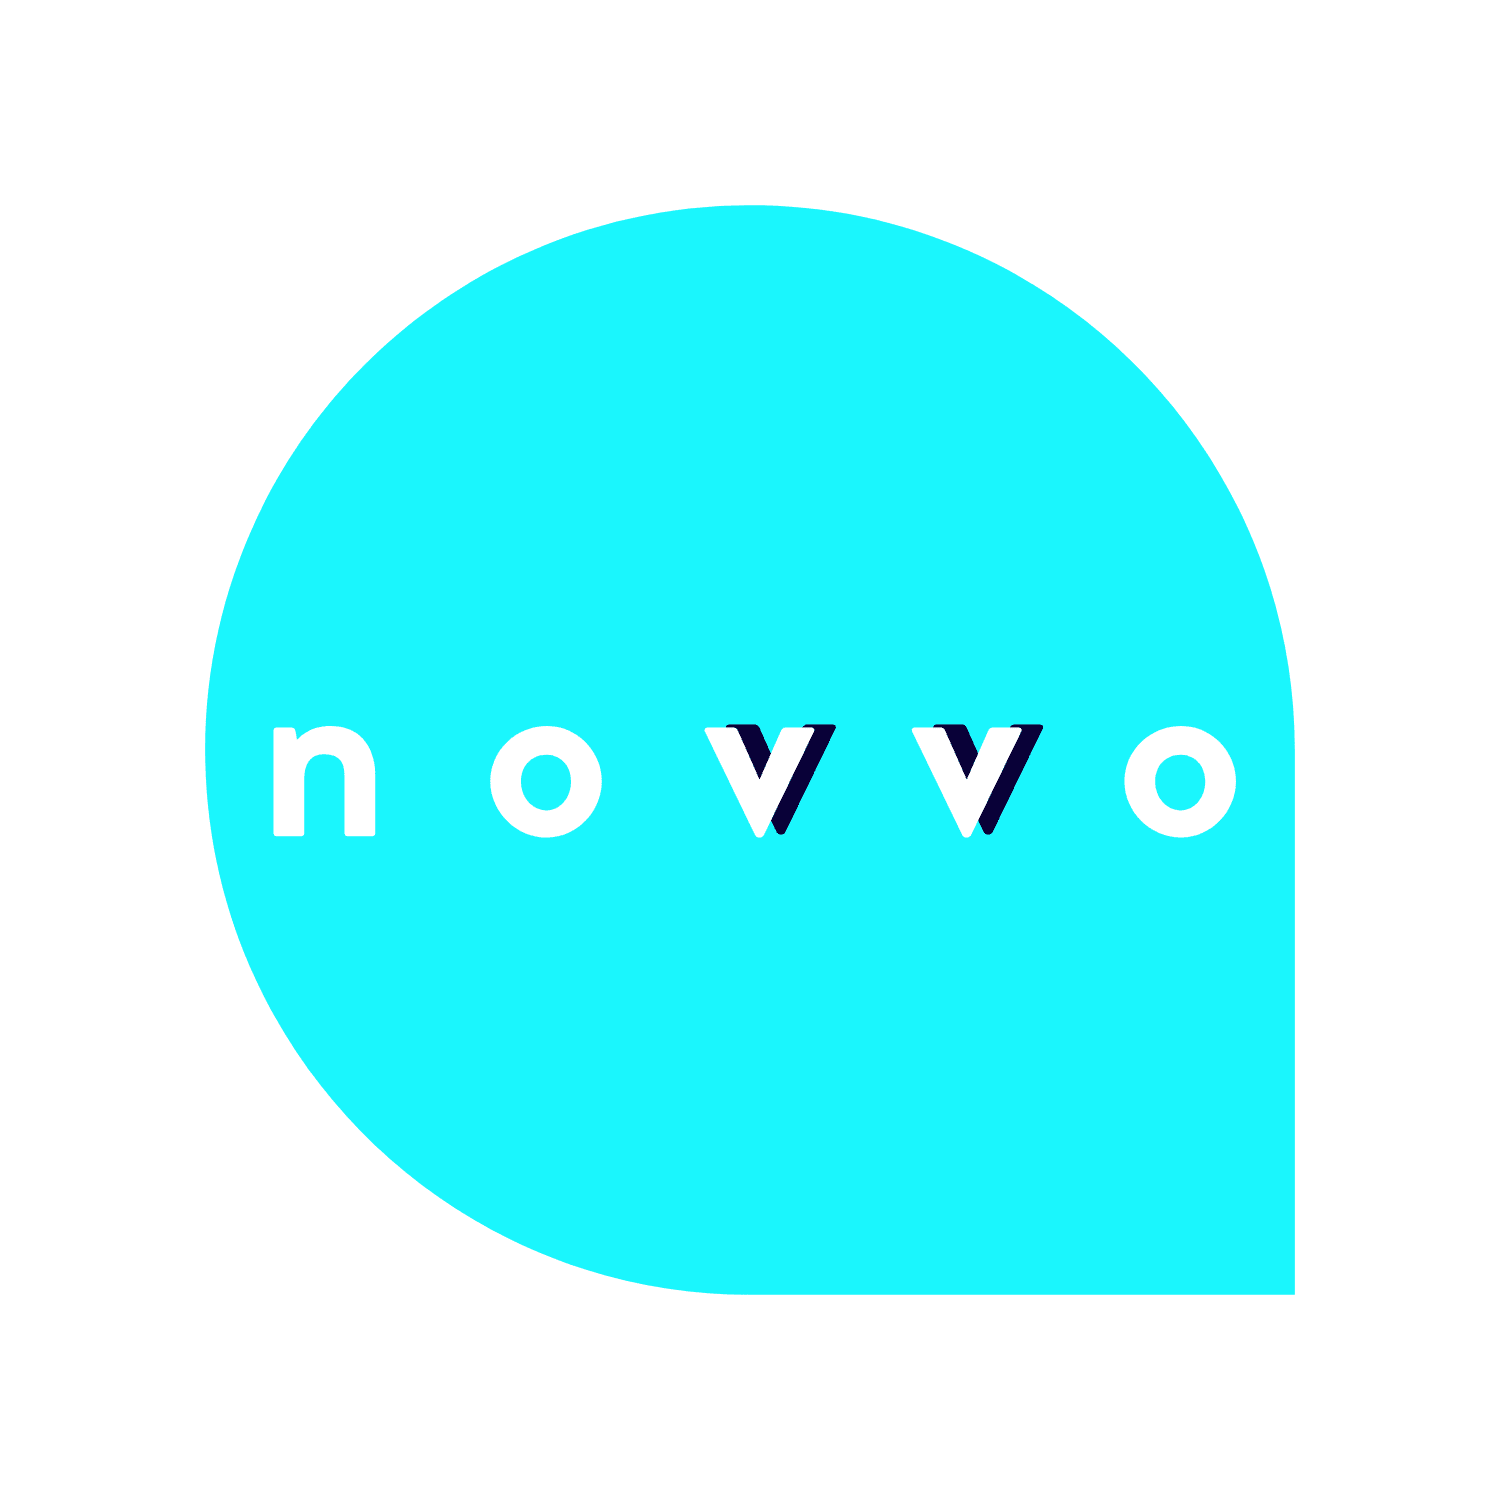 Novvo